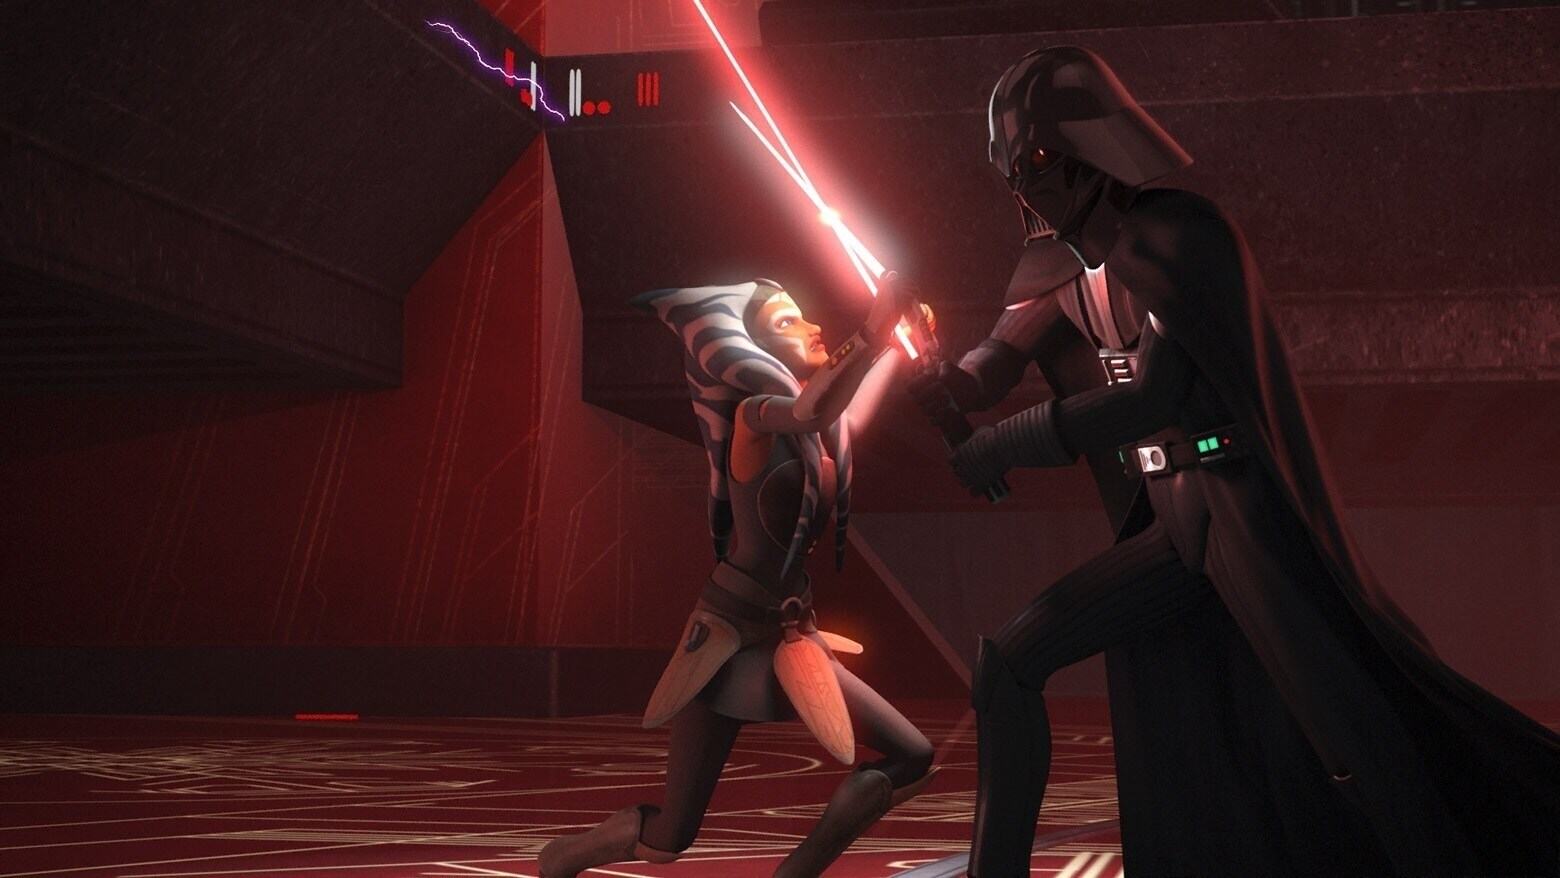 Ahsoka in a lightsaber battle with Darth Vader